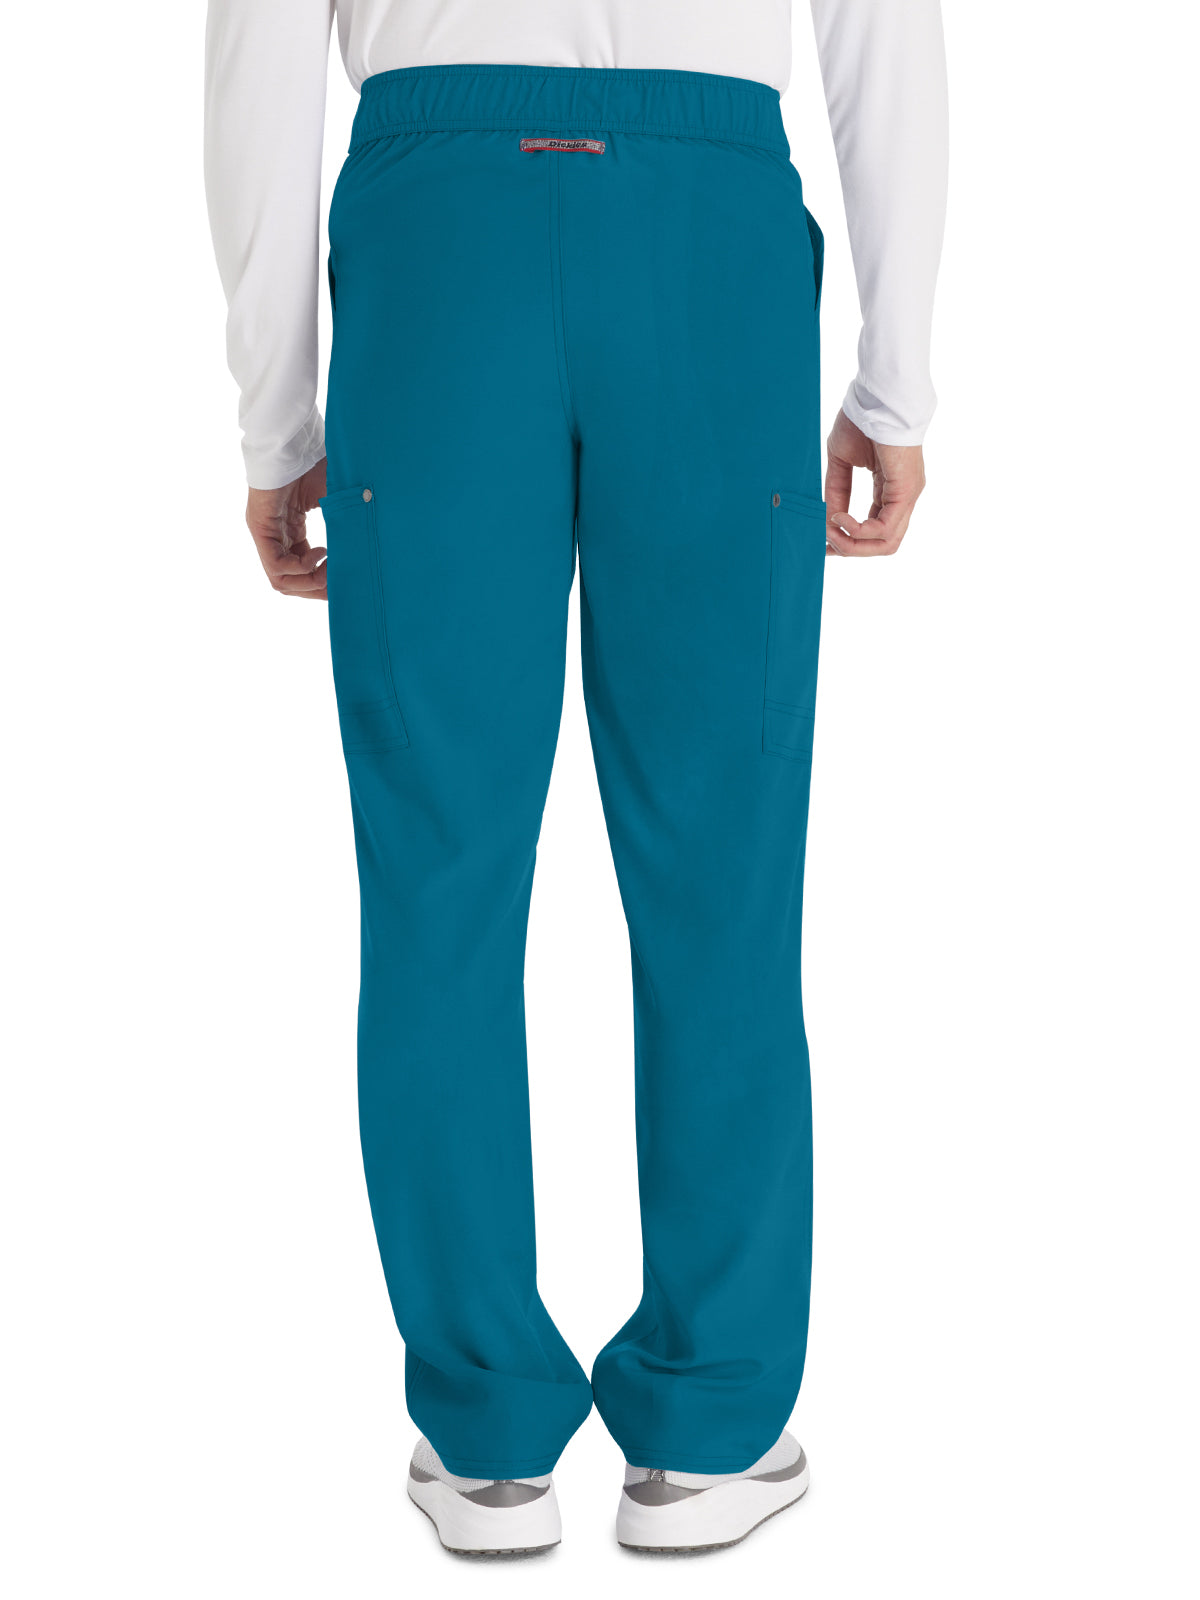 Men's 4-Pocket Zip Fly Scrub Pant - DK216 - Caribbean Blue